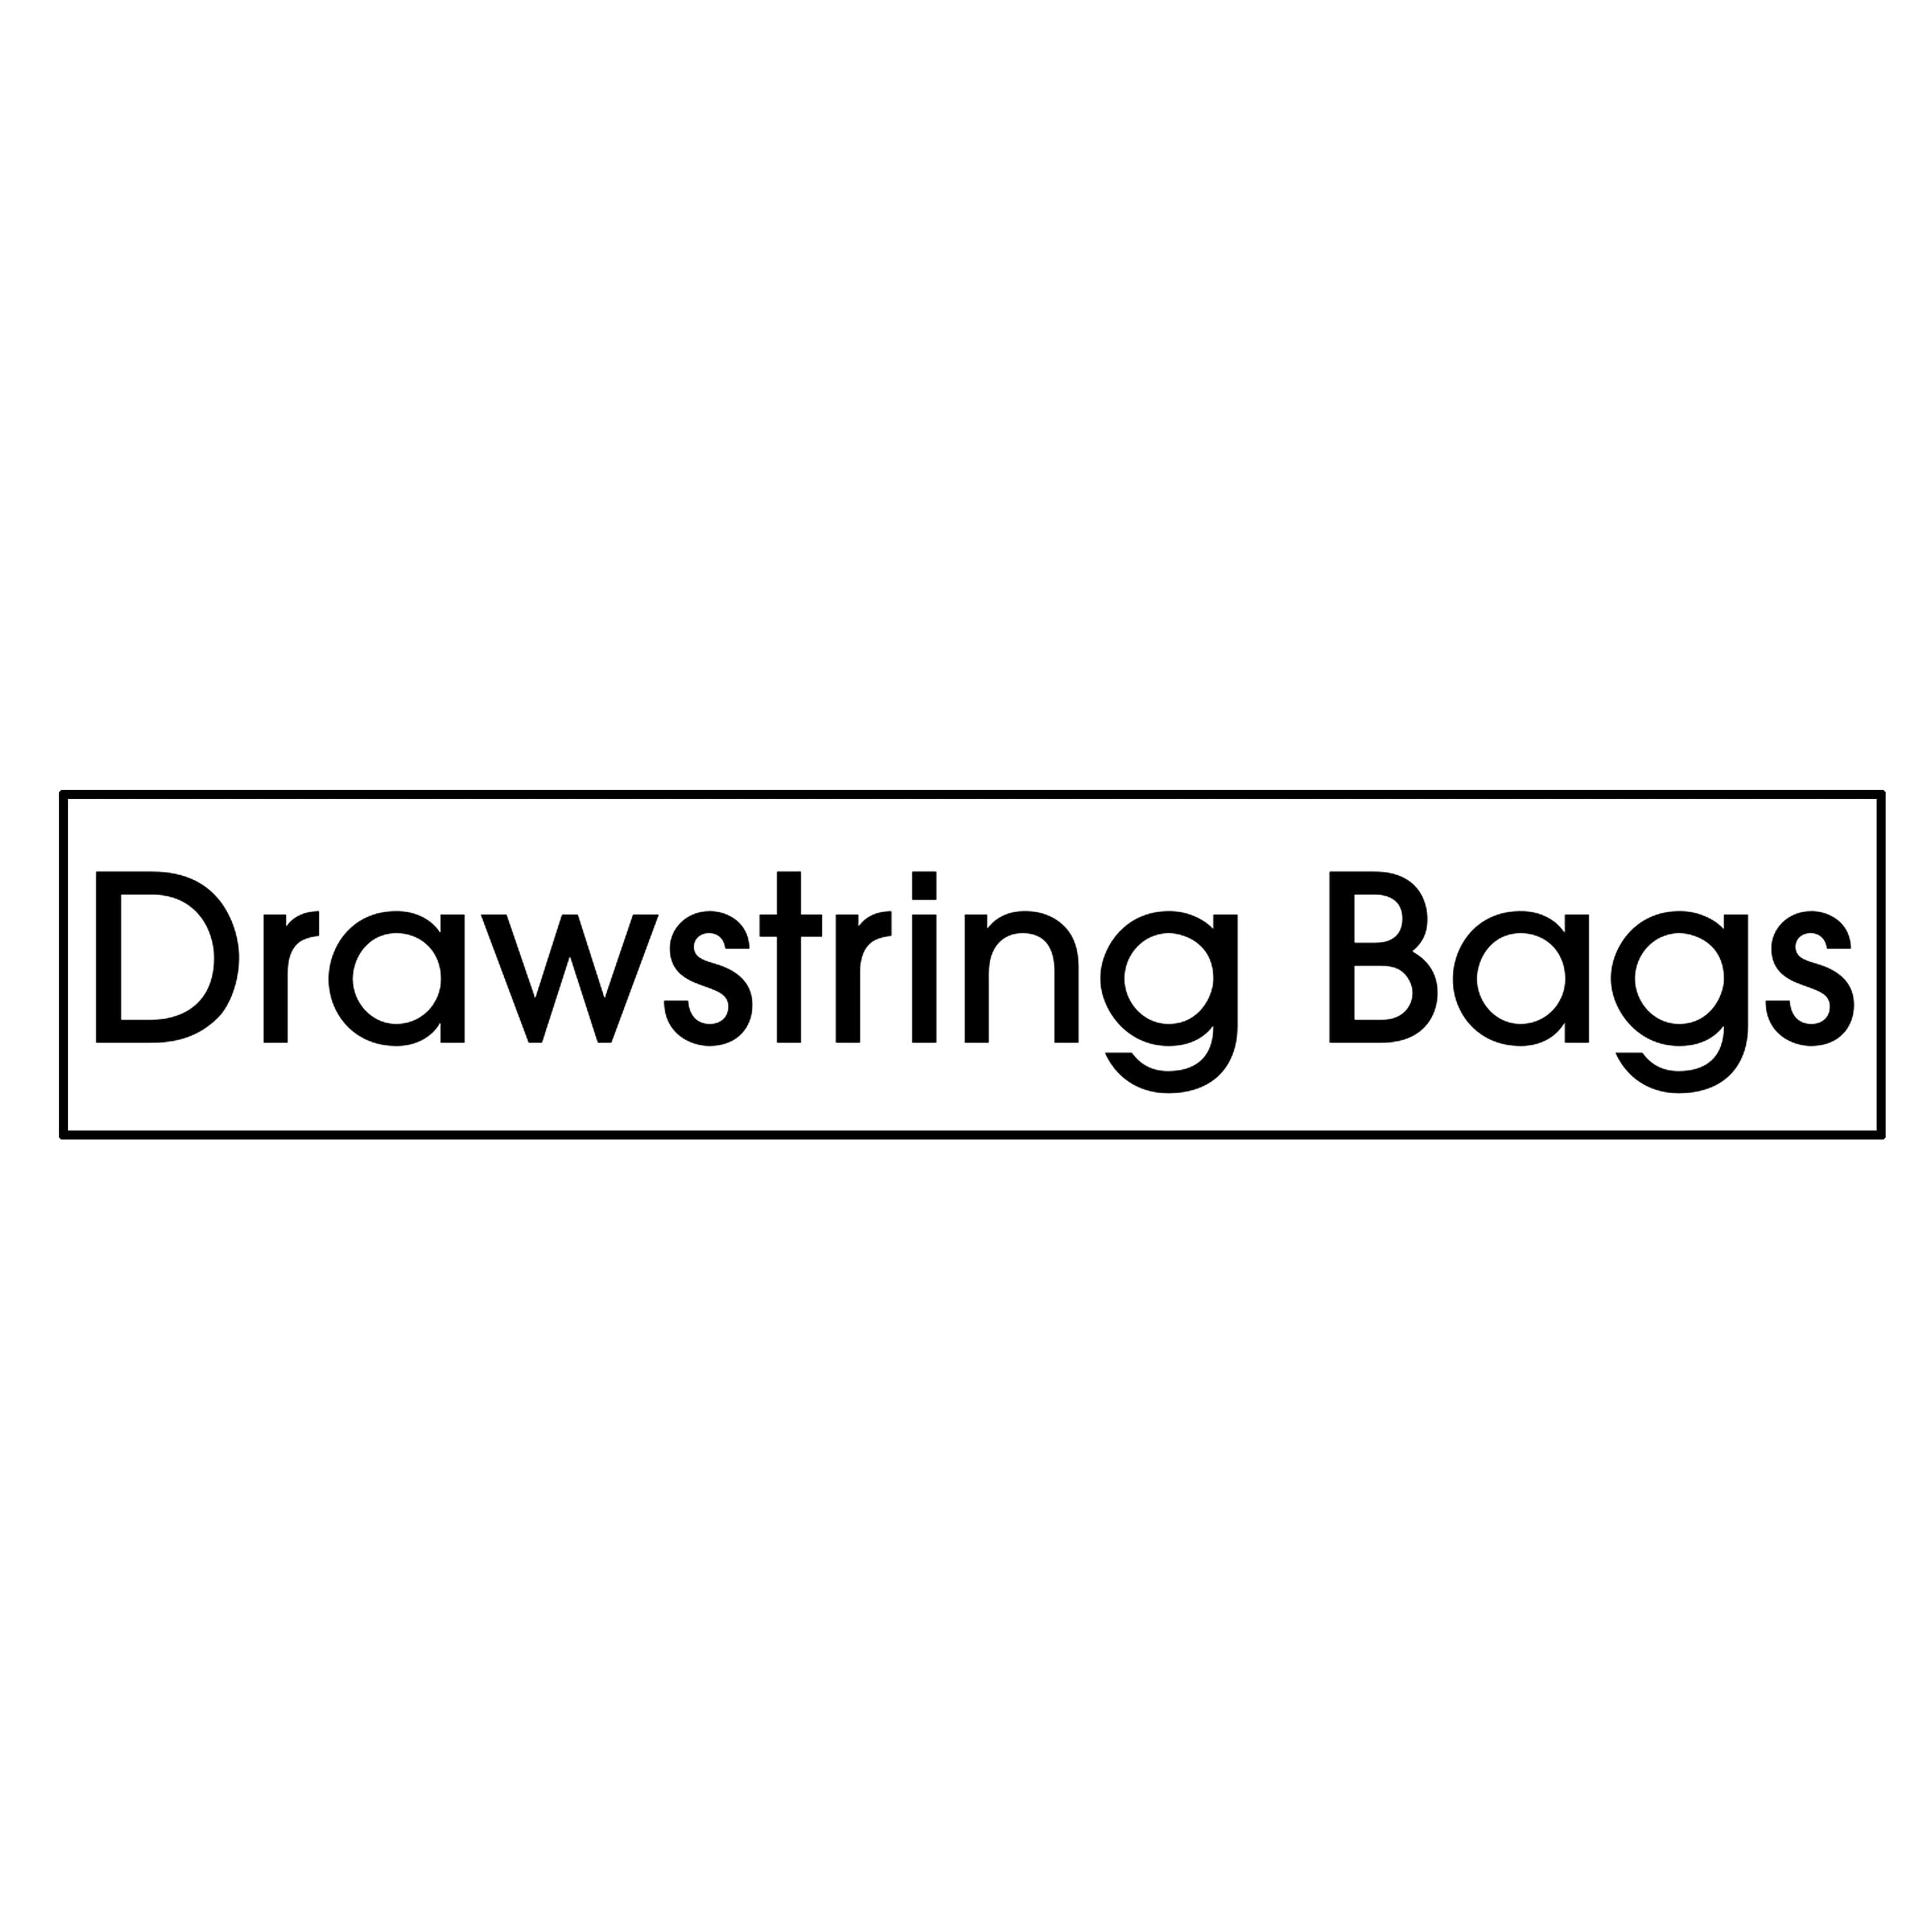 Safeguard® Drawstring Trash Bags 30 Gal. 8-COUNT